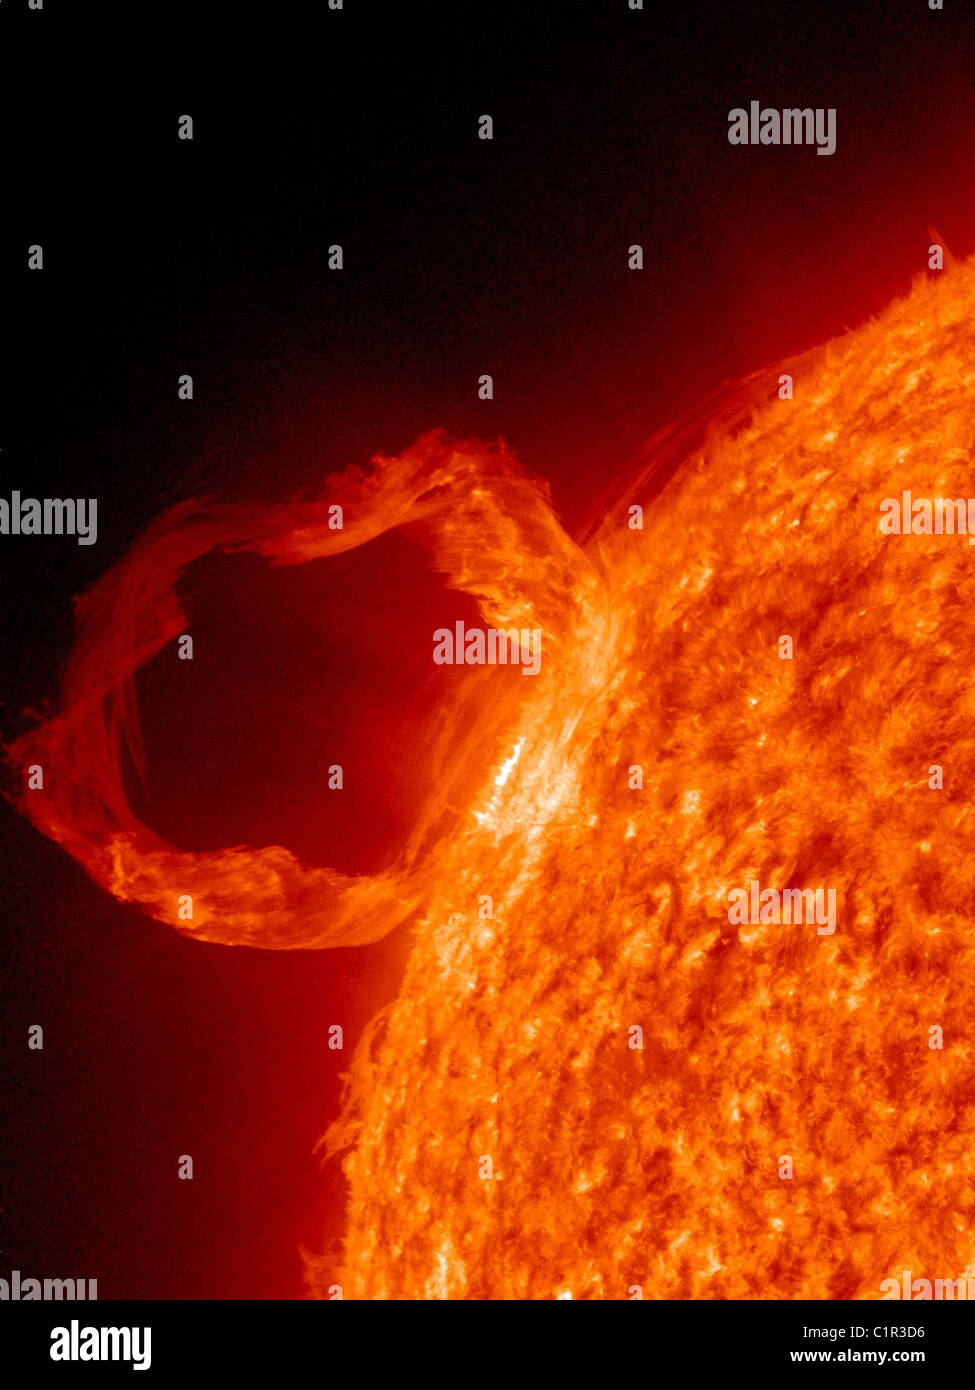 Solar Dynamics Observatory Atmospheric Imaging Assembly (AIA) zeigt im Detail eine Sonnen-Protuberanz Eruption. Stockfoto